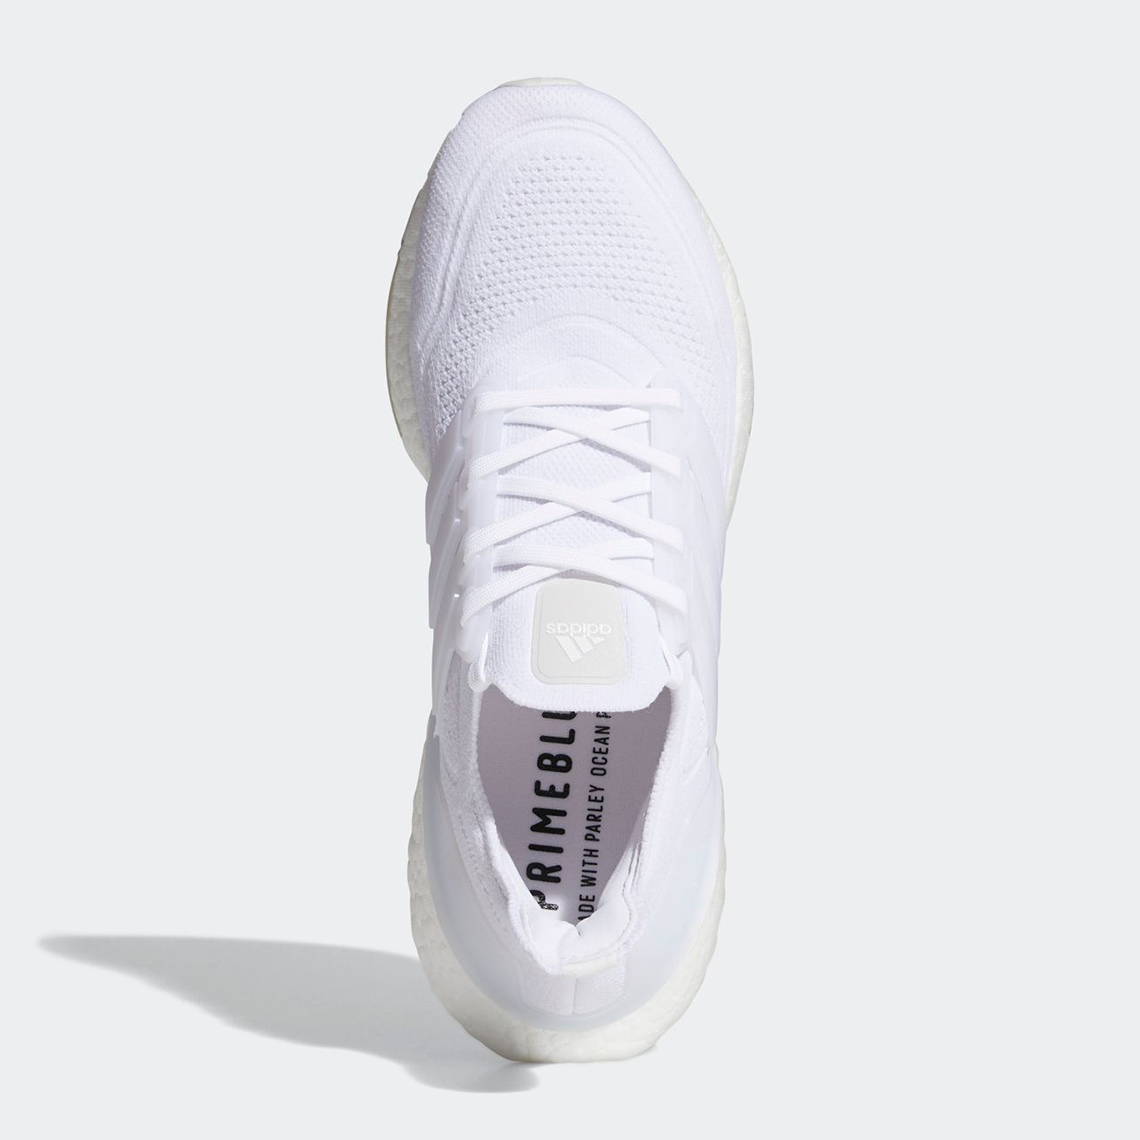 Adidas Ultraboost Triple White Fy0379 2